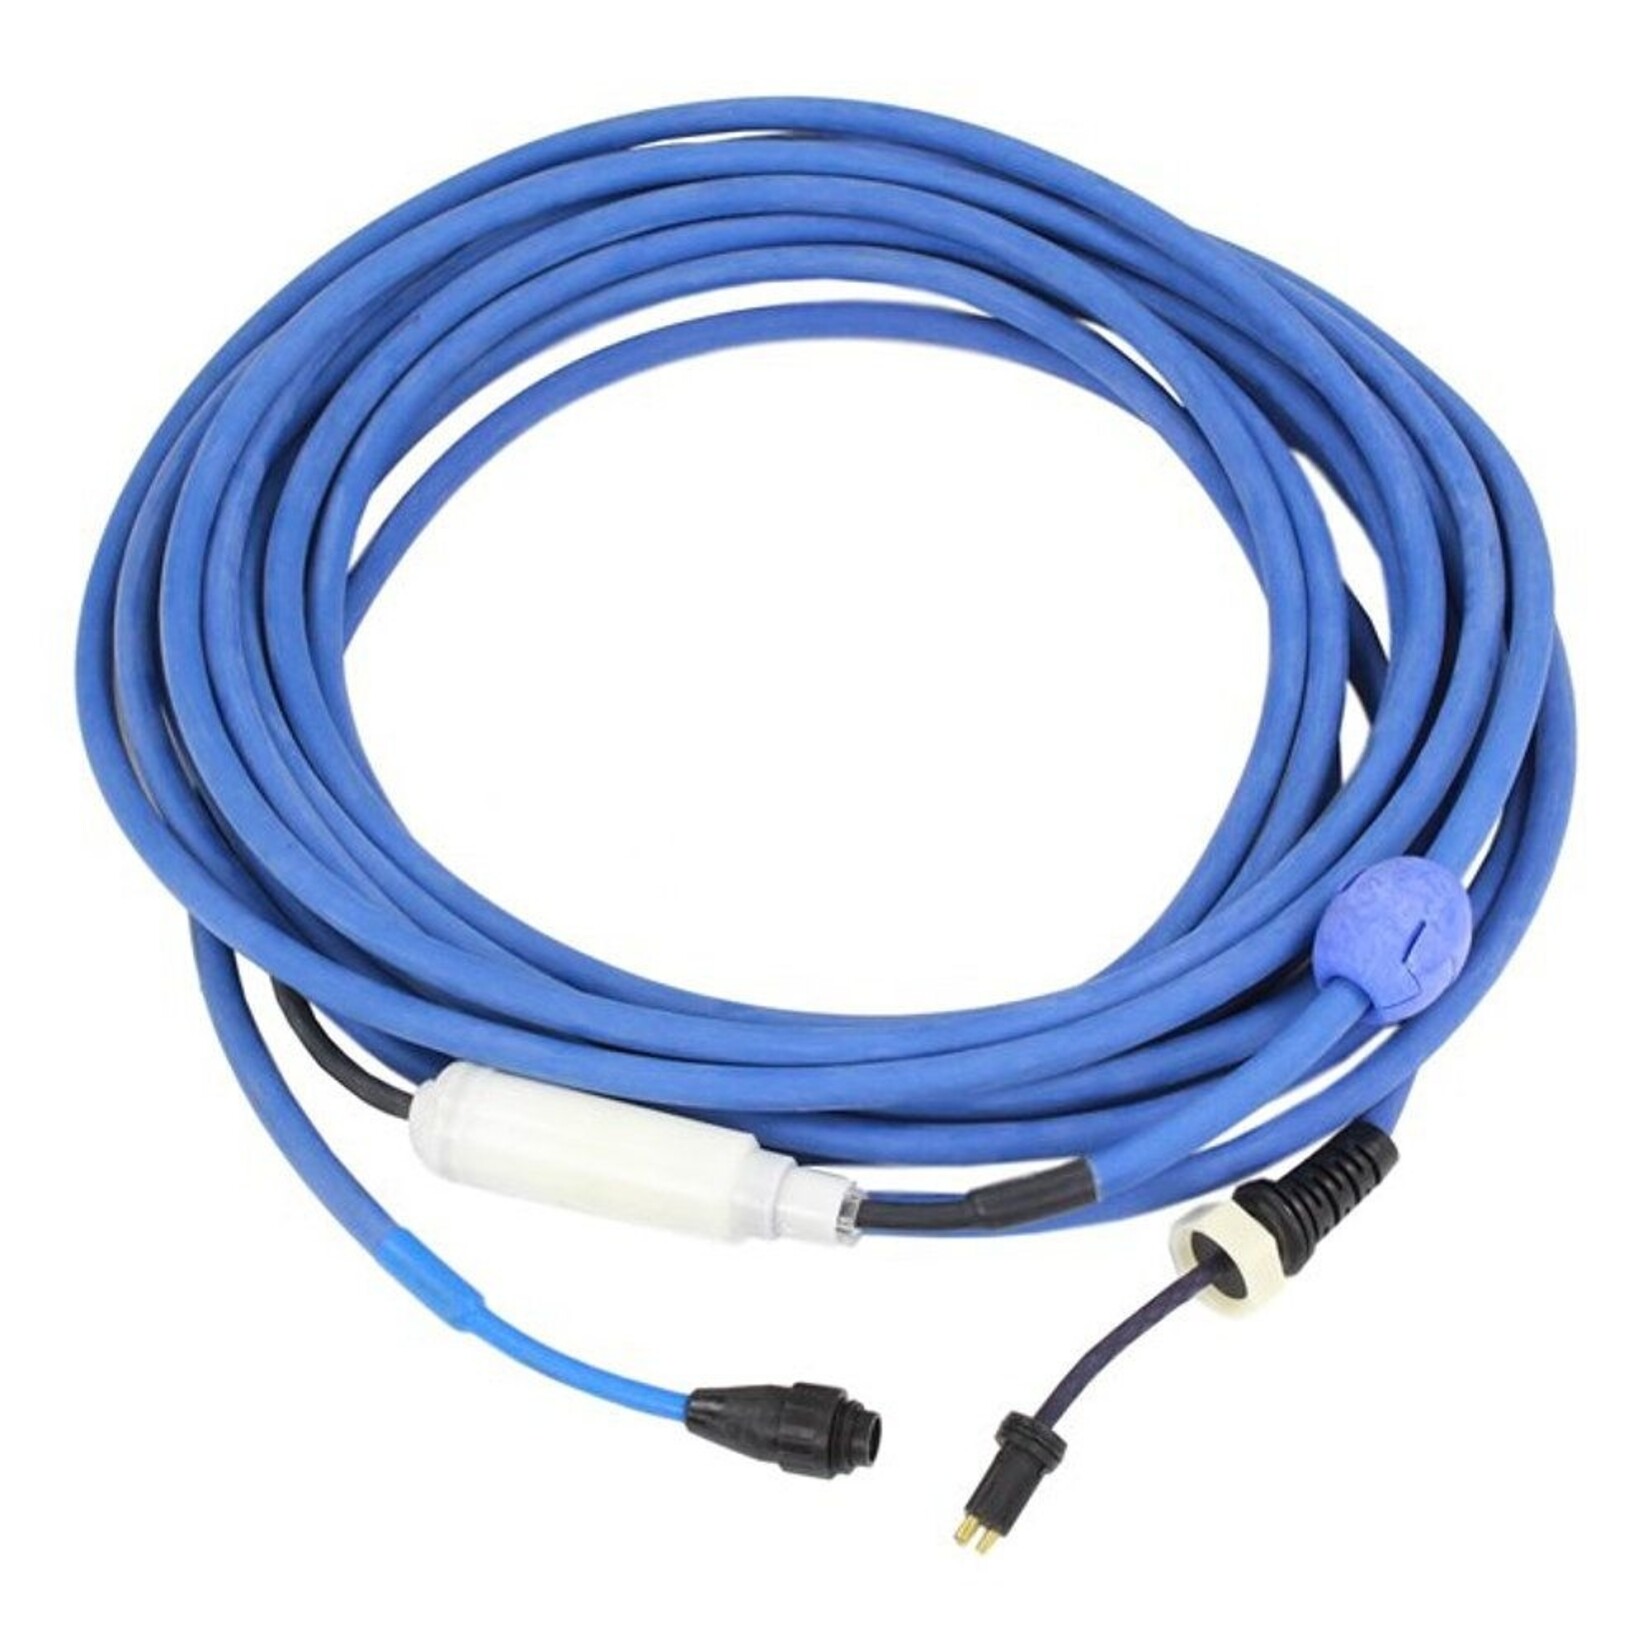 Maytronics Dolphin Maytronics 9995873-DIY Dolphin Dynamic kabel met swivel voor M500